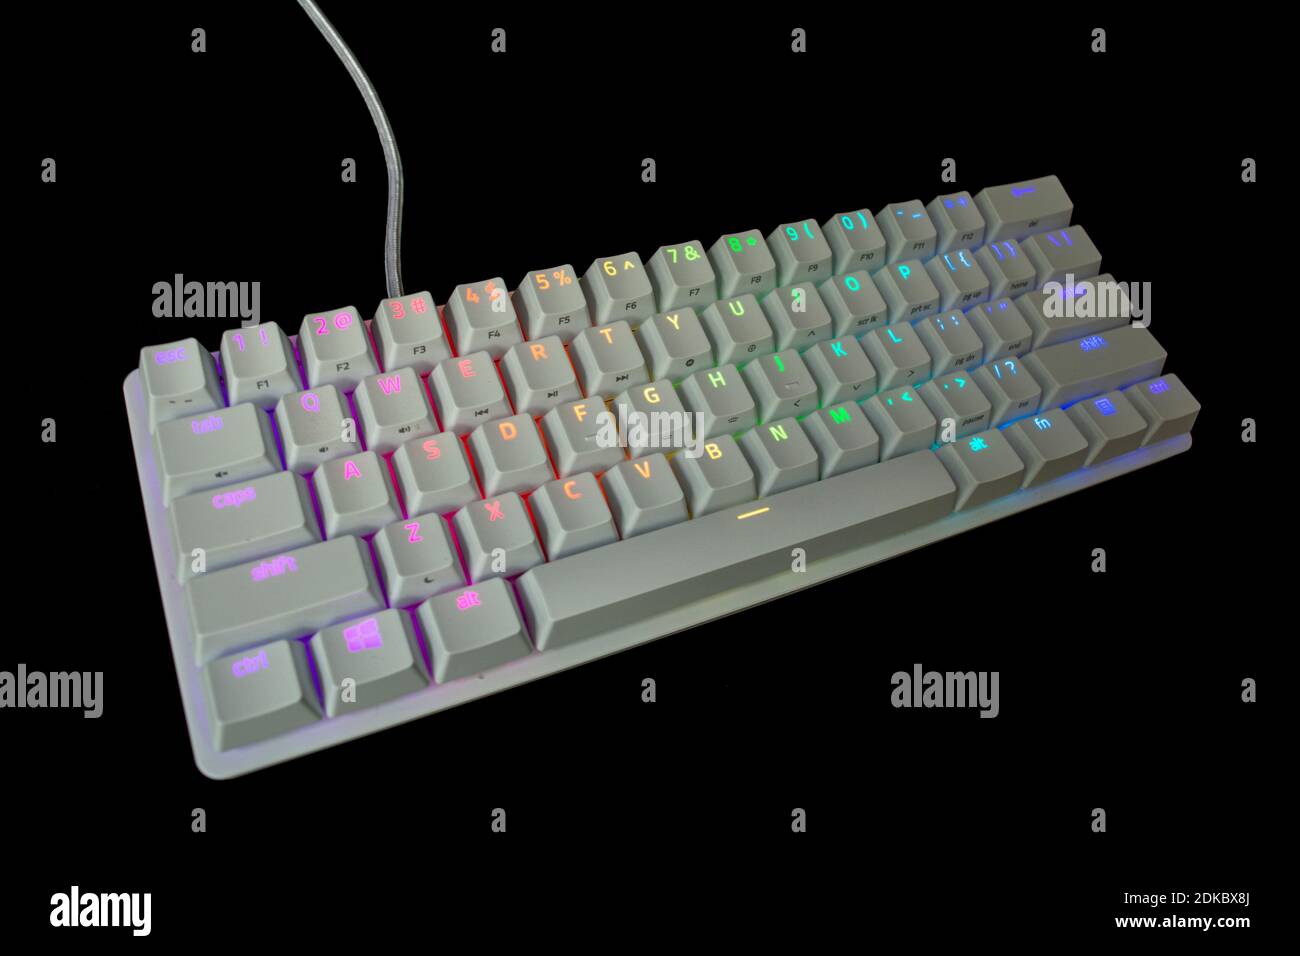 19 September 2020-Bucharest, Romania. The keyboard Razer Huntsman mini made  as a mini keyboard for gamers Stock Photo - Alamy